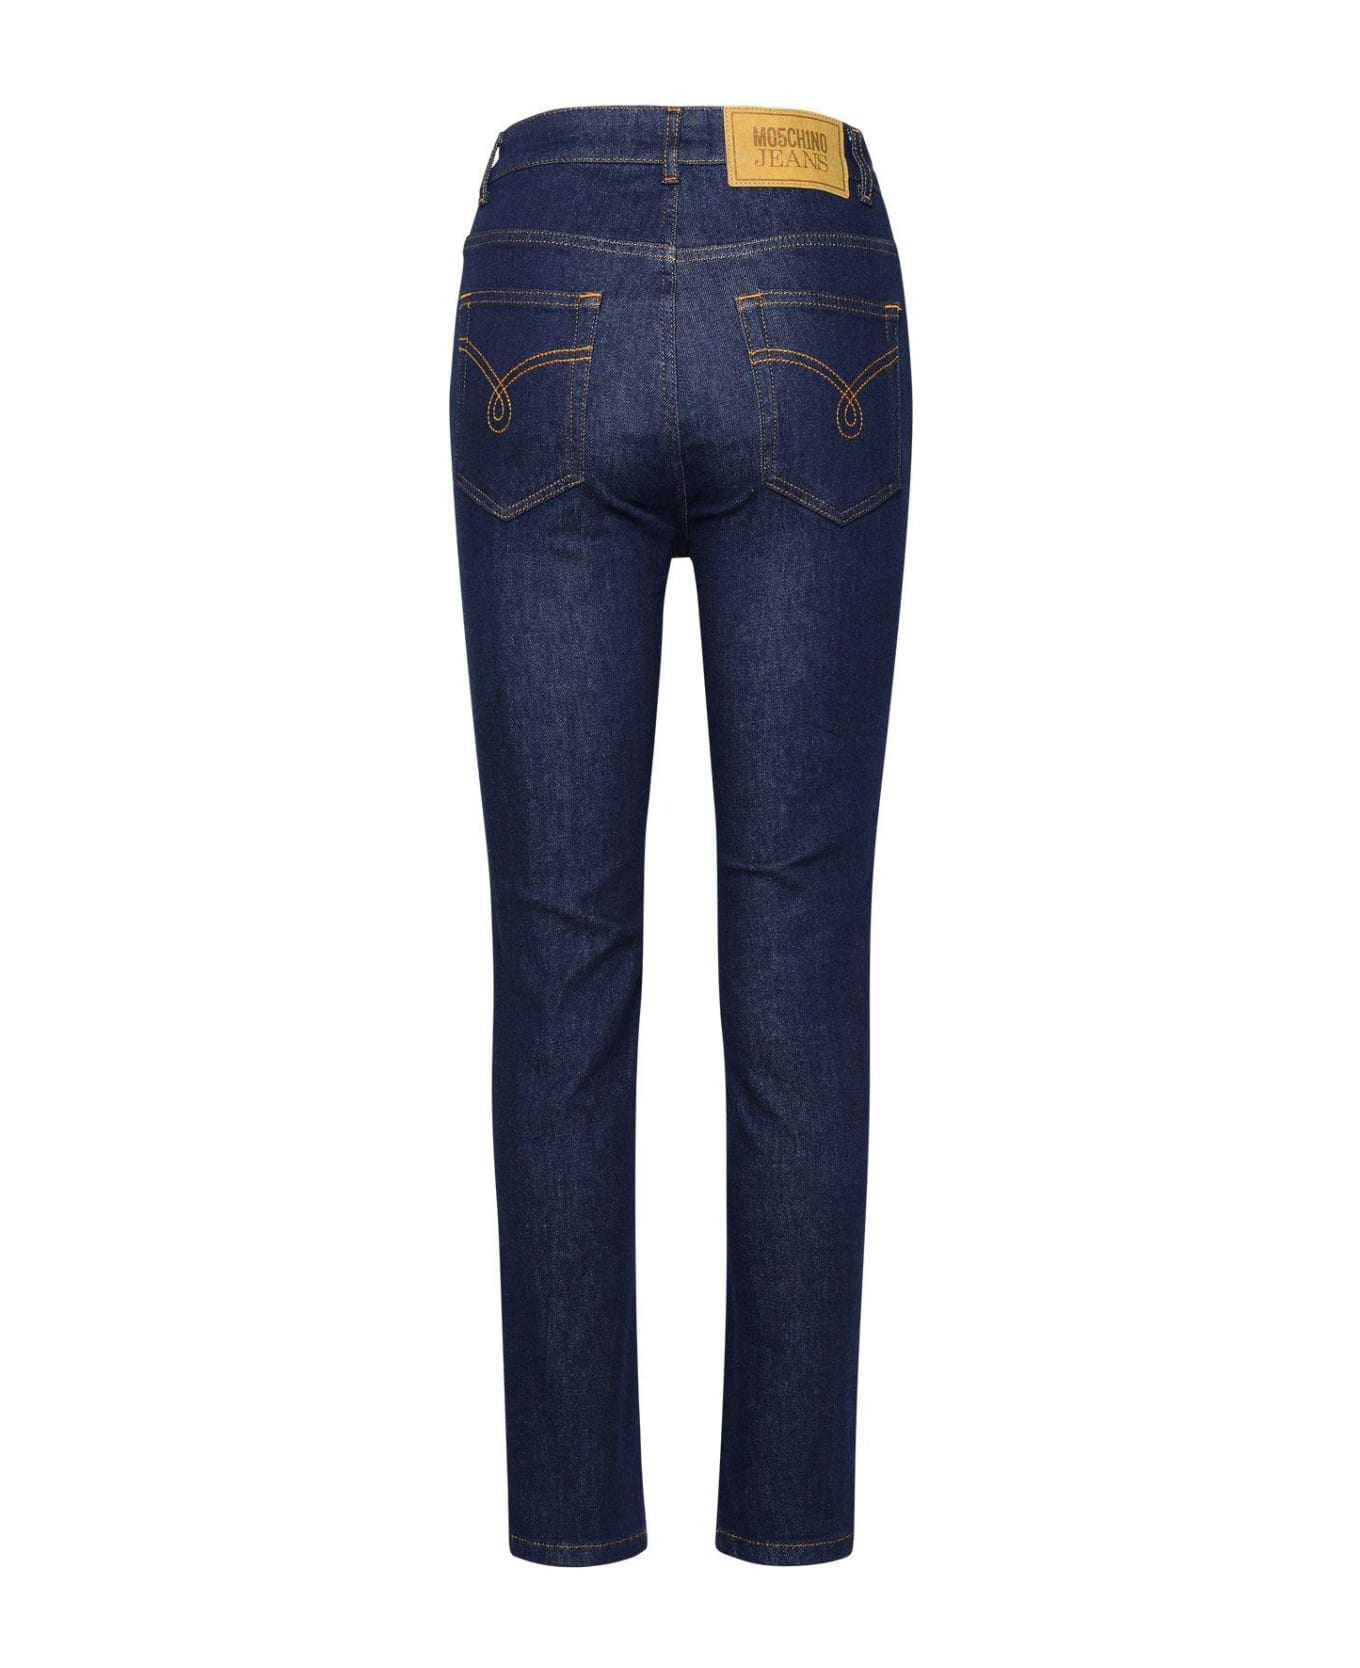 M05CH1N0 Jeans High Waist Slim Fit Jeans - Denim